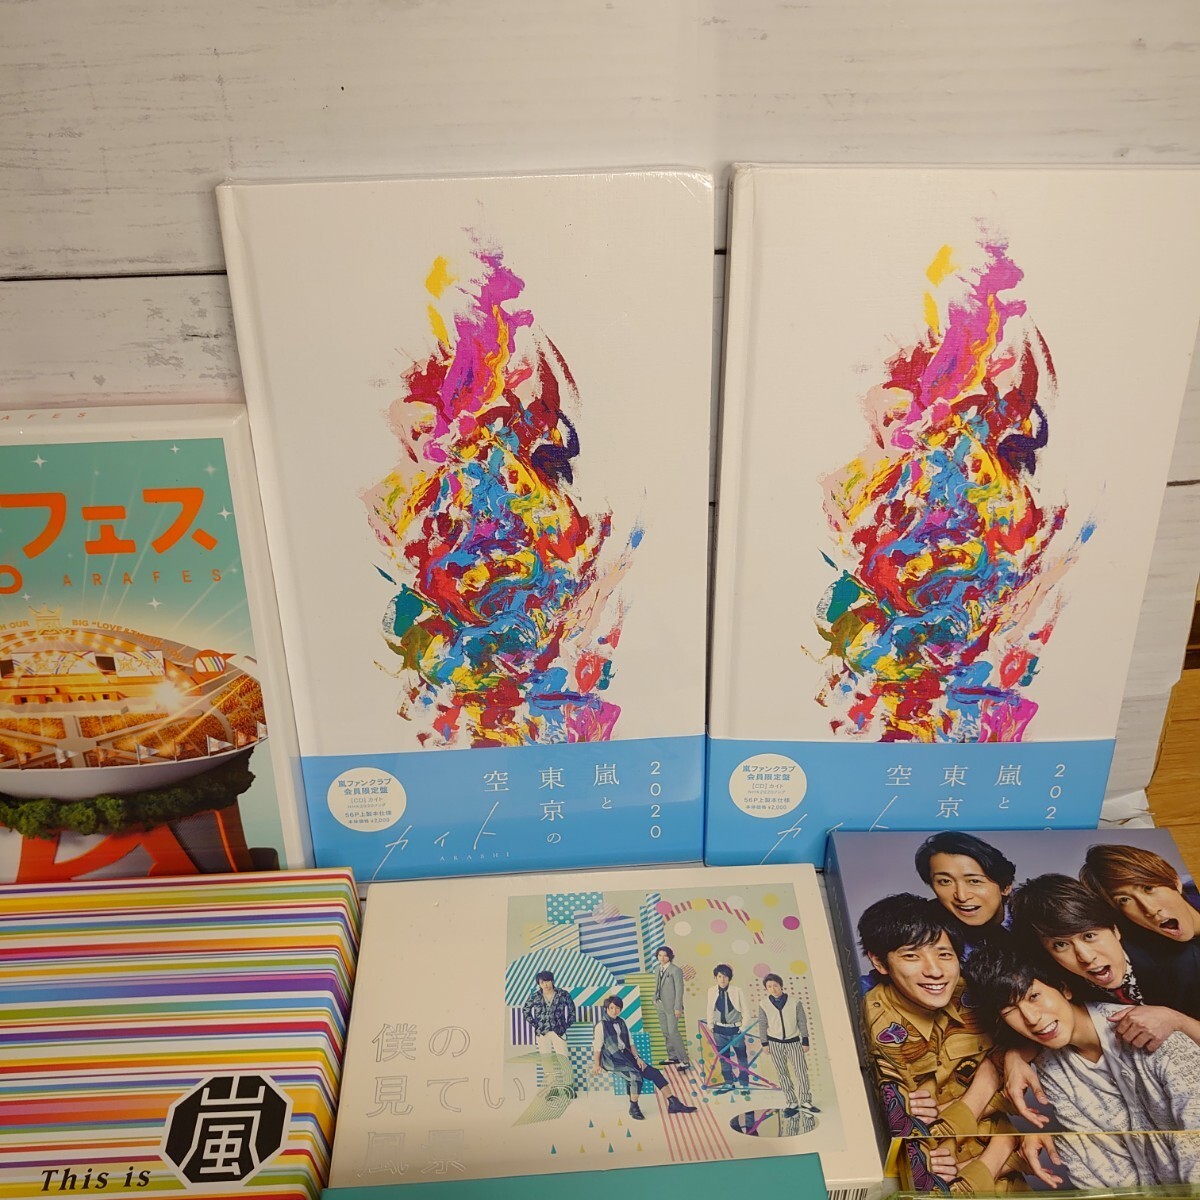 1 jpy start Johnny's set sale storm KinKi Kids TOKIO News.jani- V6 other limited goods CD DVD large amount junk treatment 